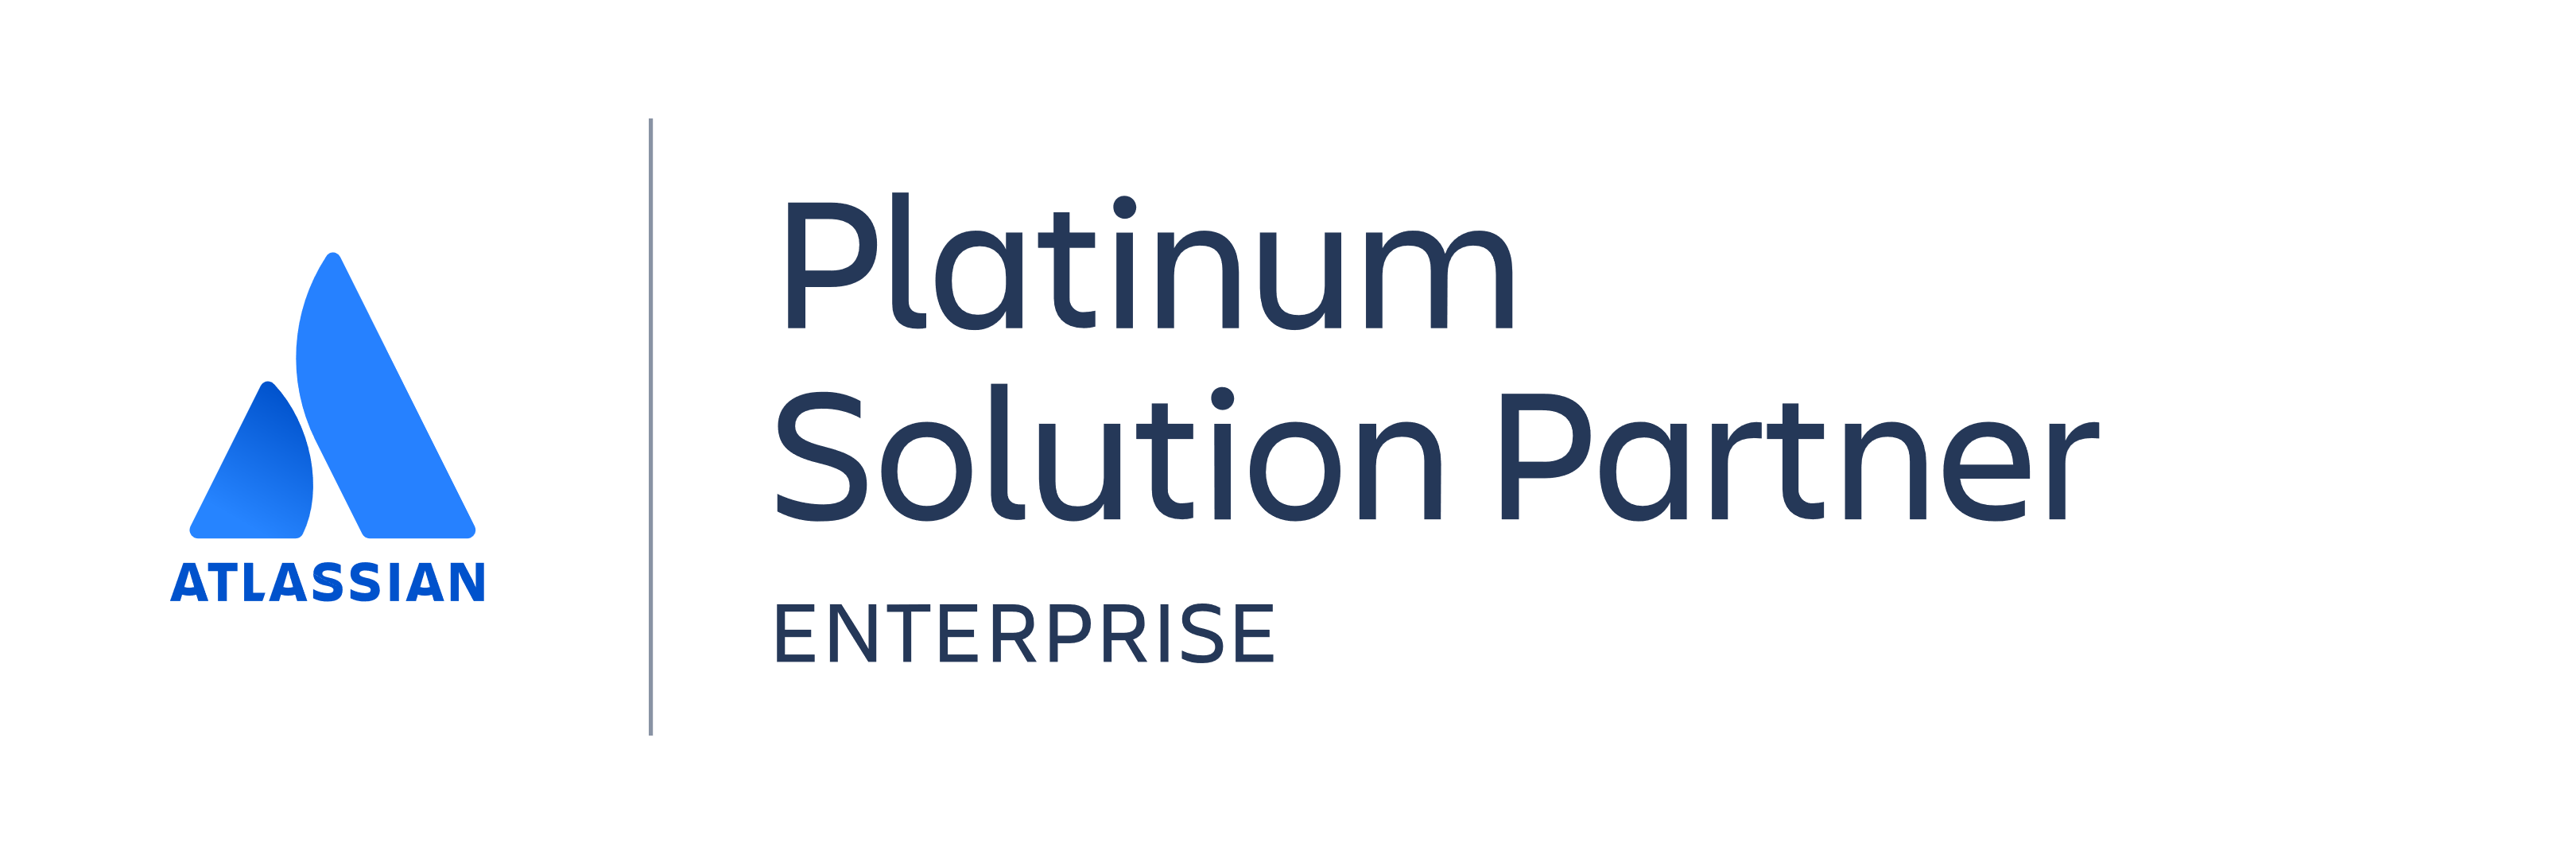 Atlassian-Platinum-Partner-Solutions-Expert